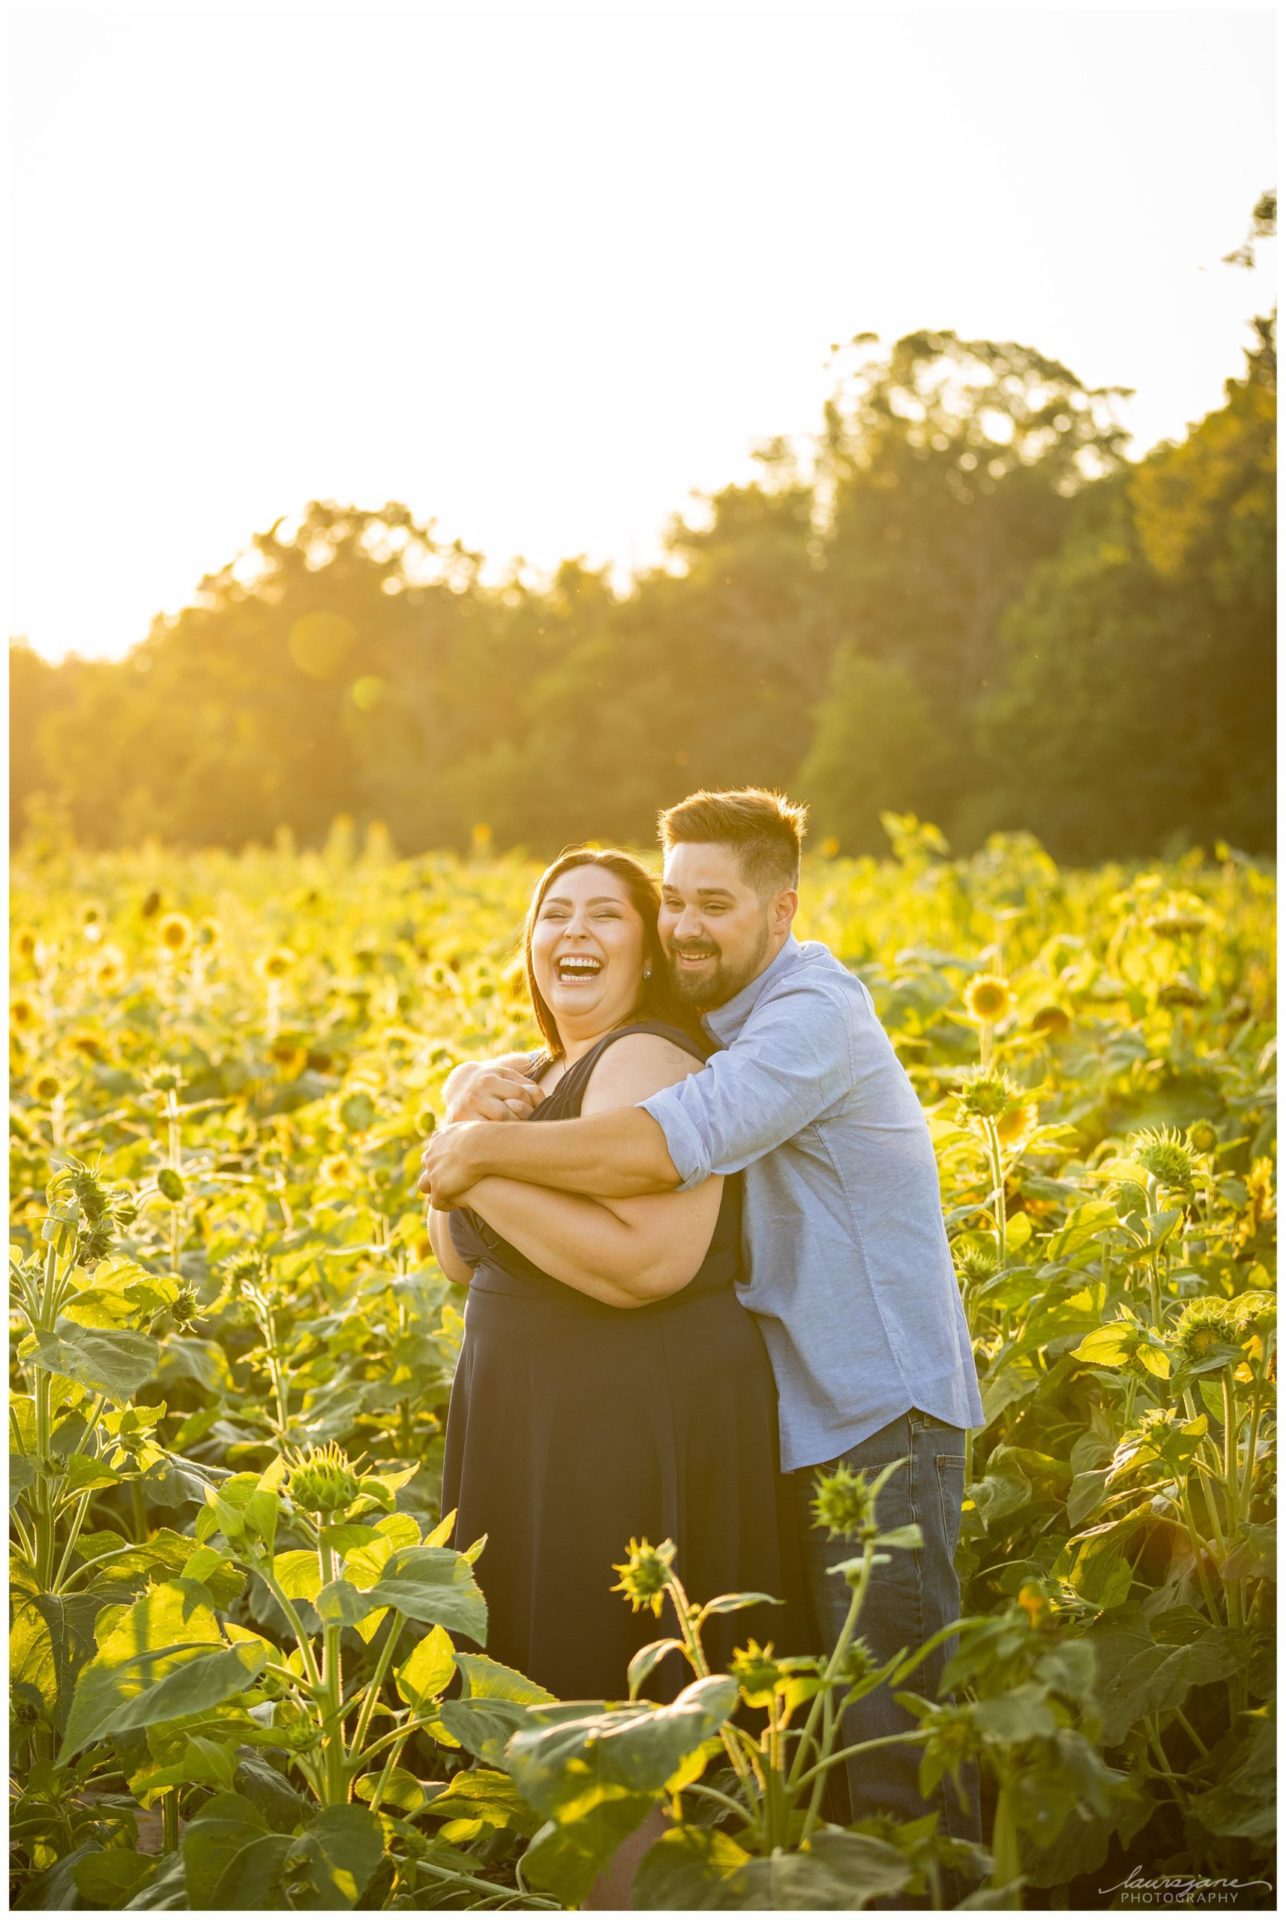 Sunny Engagement Photos at the Lannon Sunflower Farm